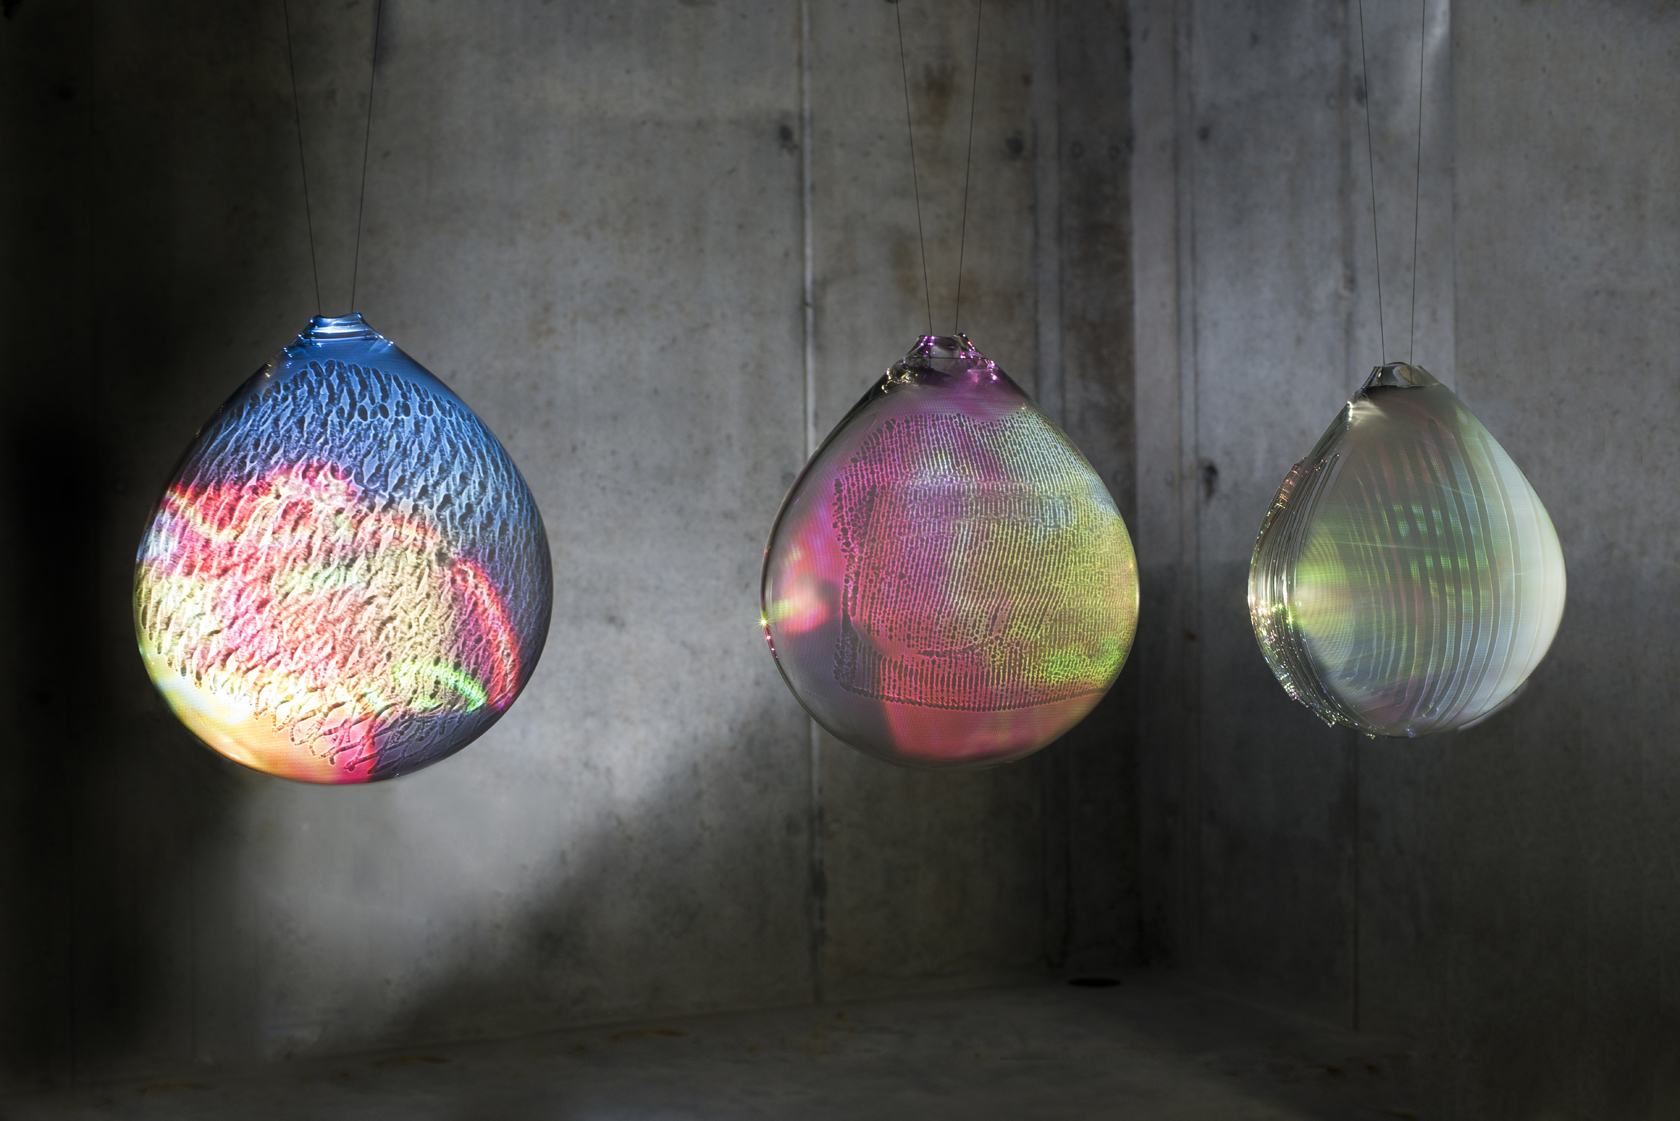  Blown glass, projection, J/K, 2014 